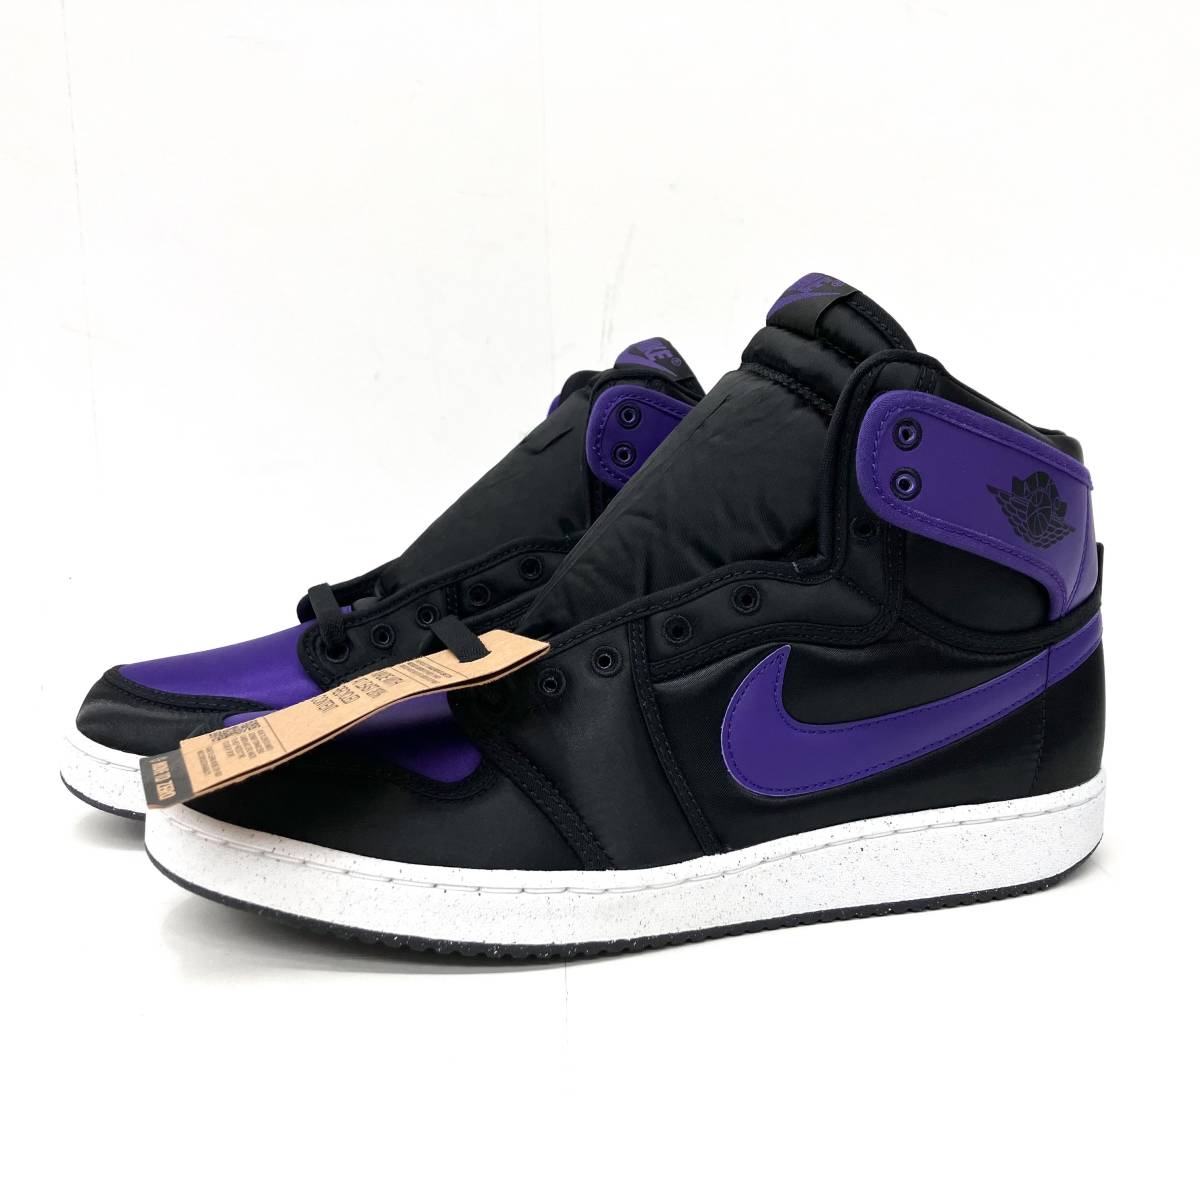 Nike Air Jordan 1 KO 'Field Purple' ナイキ エアジョーダン1 KO 'フィールドパープル' スニーカー DO5047-005 サイズ28.5cm BBスタンプ